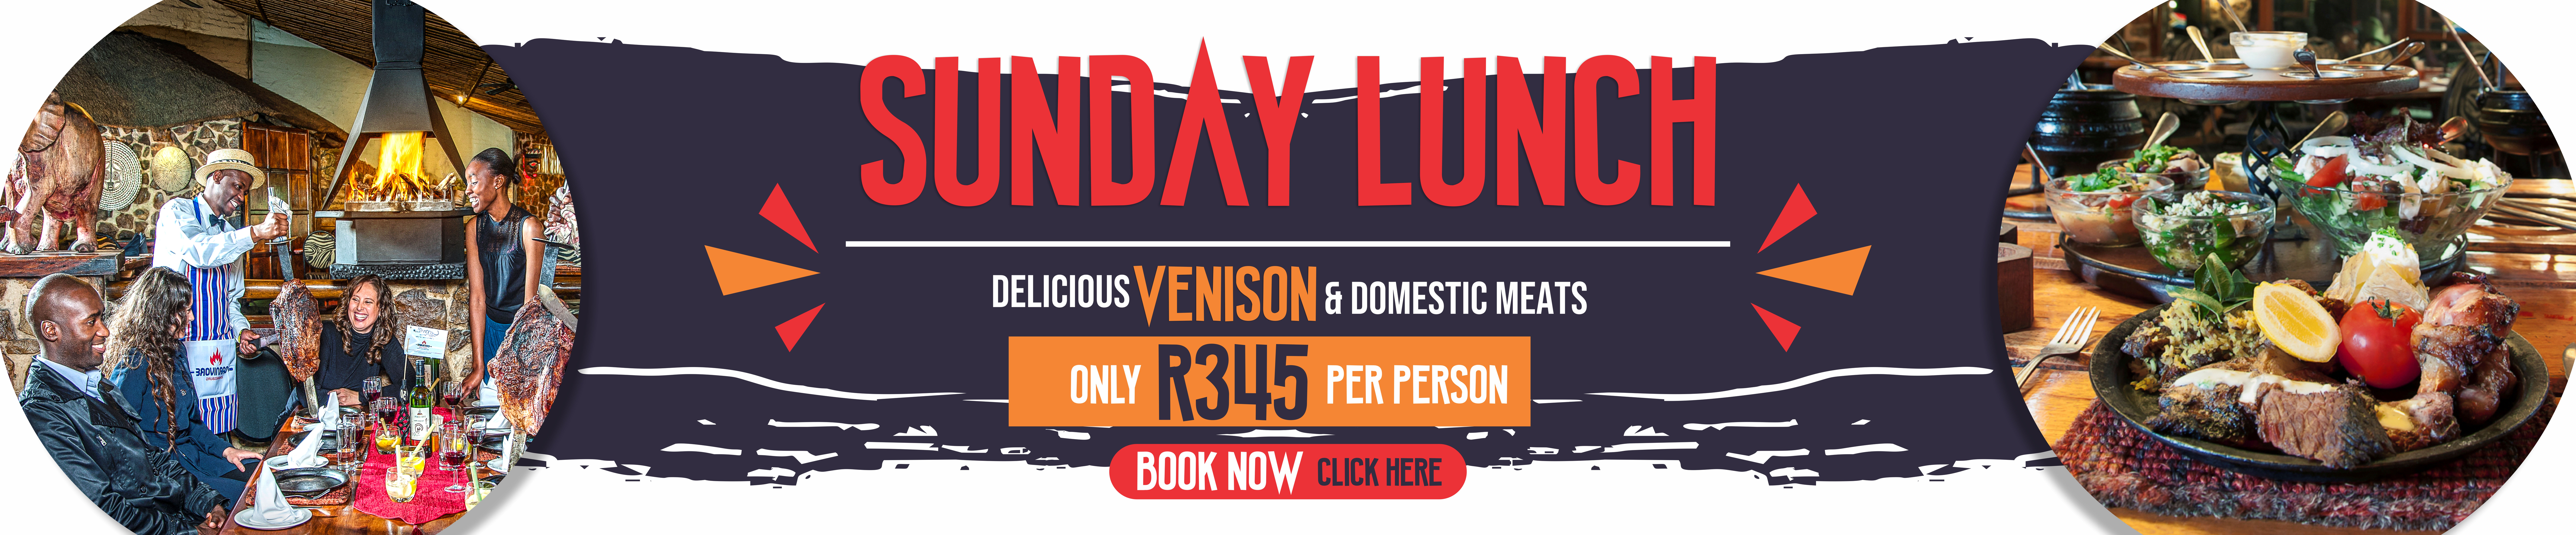 Carnivore Restaurant Sunday Lunch in Muldersdrift Gauteng